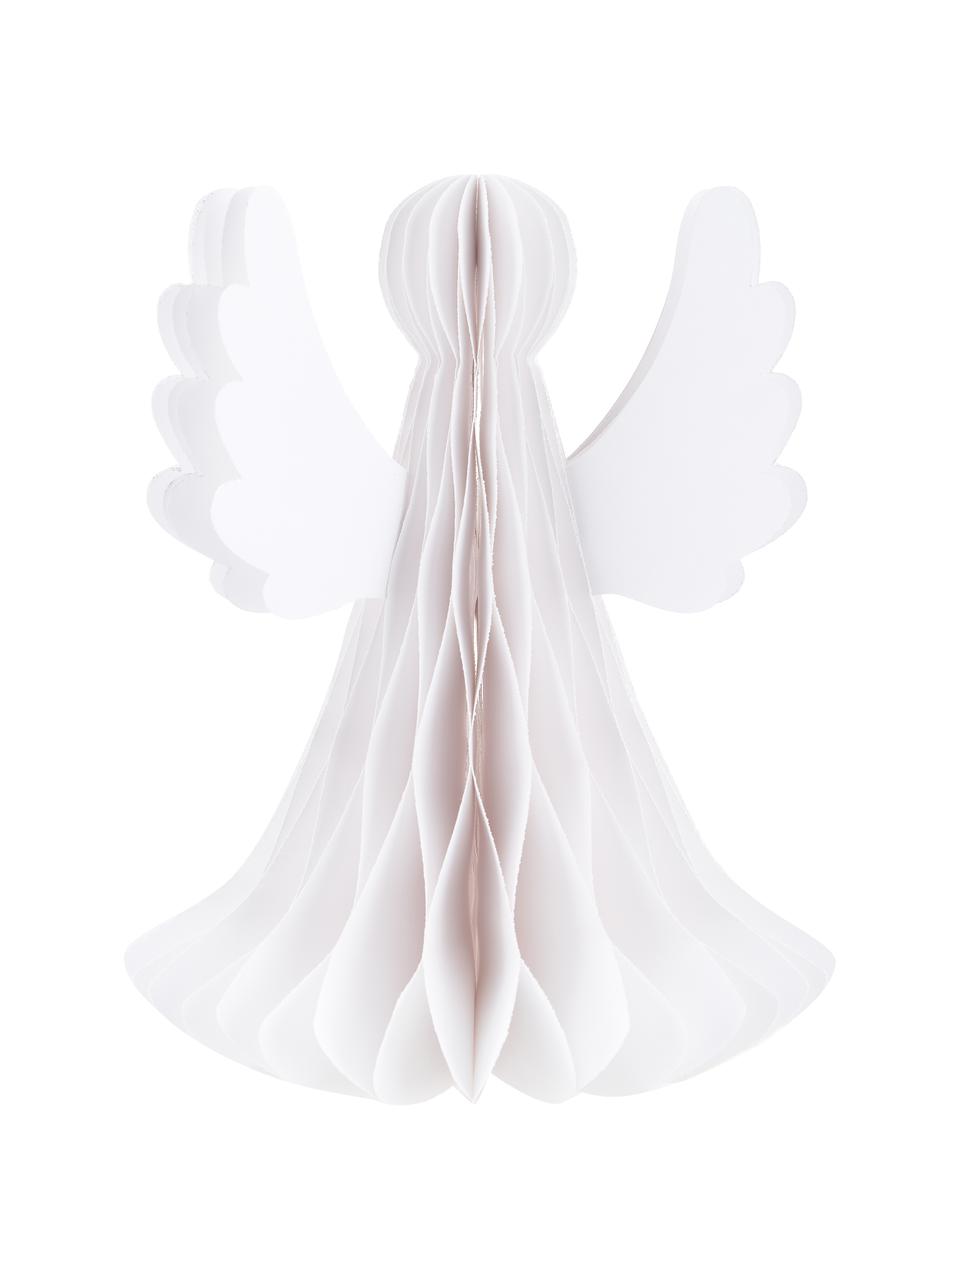 Decoratief object Angel in wit, Papier, Wit, Ø 21 x H 27 cm